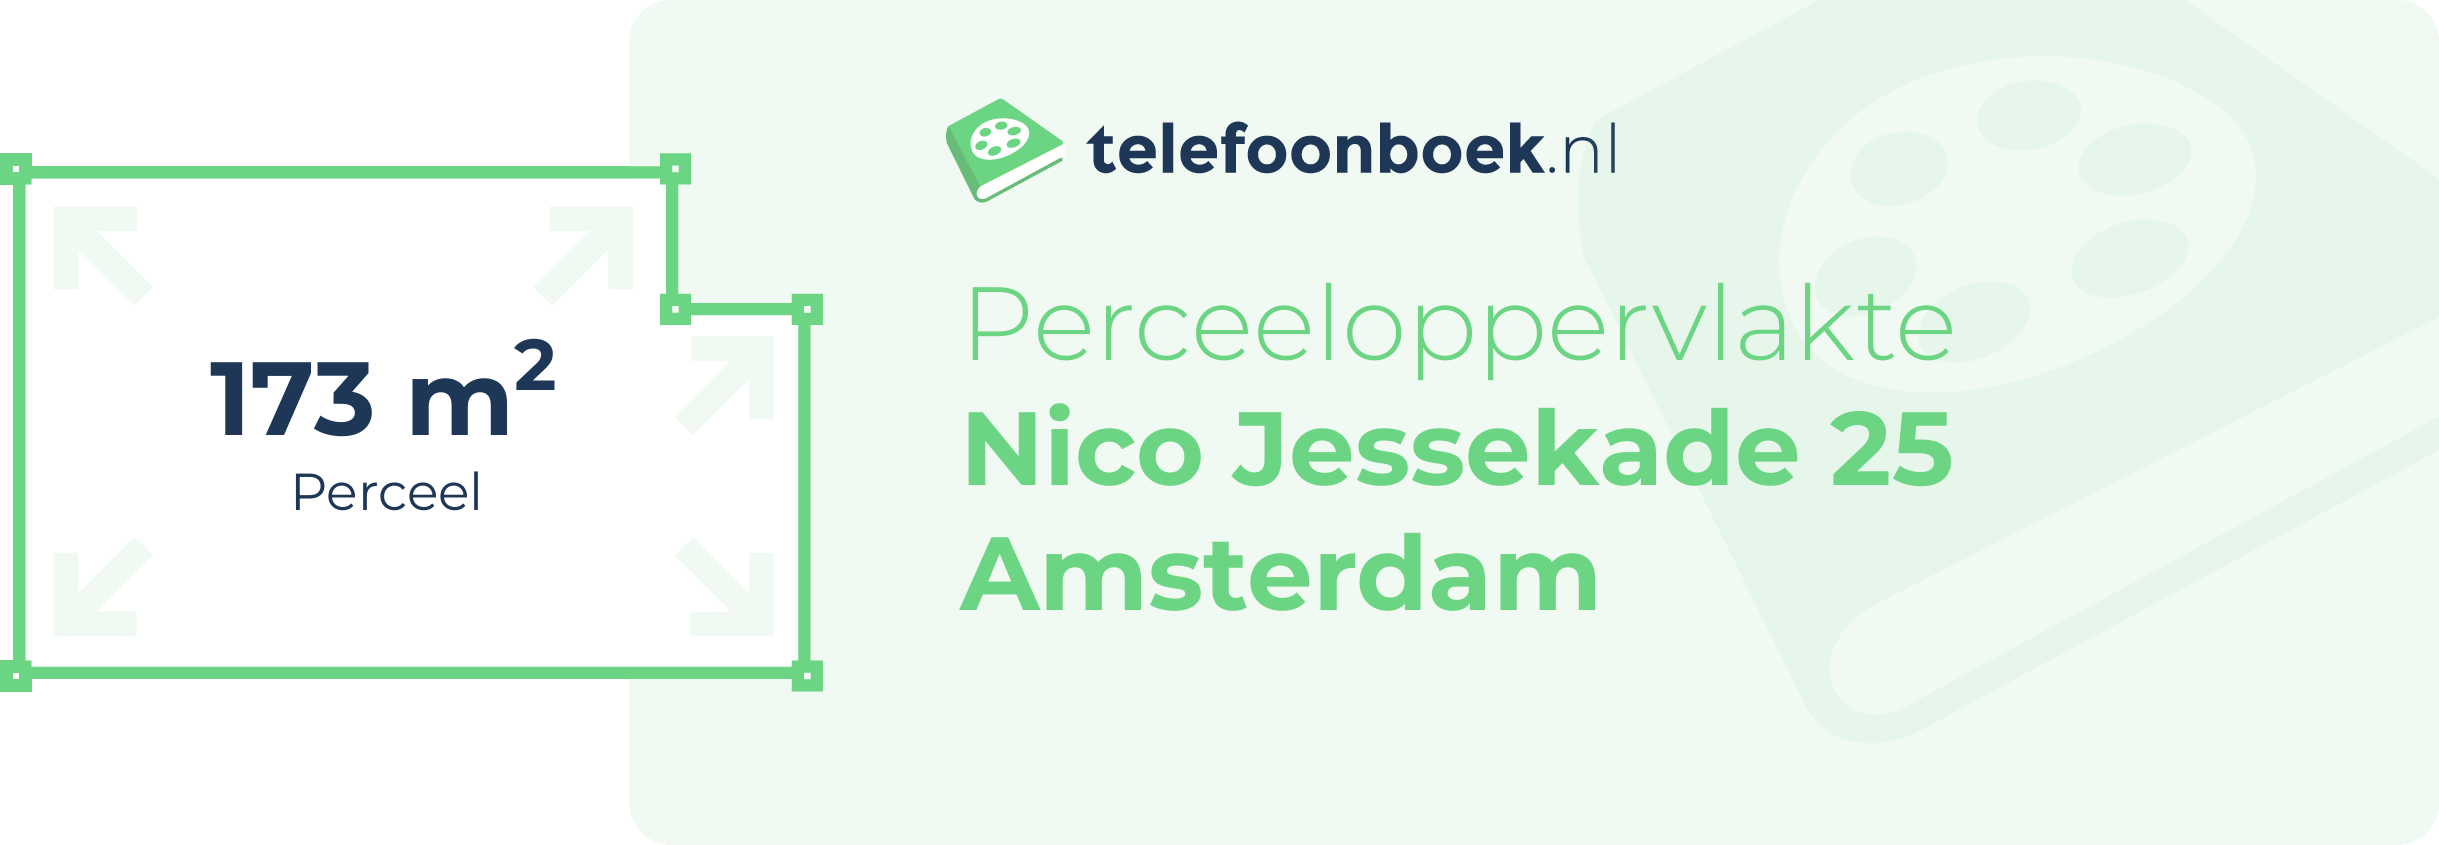 Perceeloppervlakte Nico Jessekade 25 Amsterdam